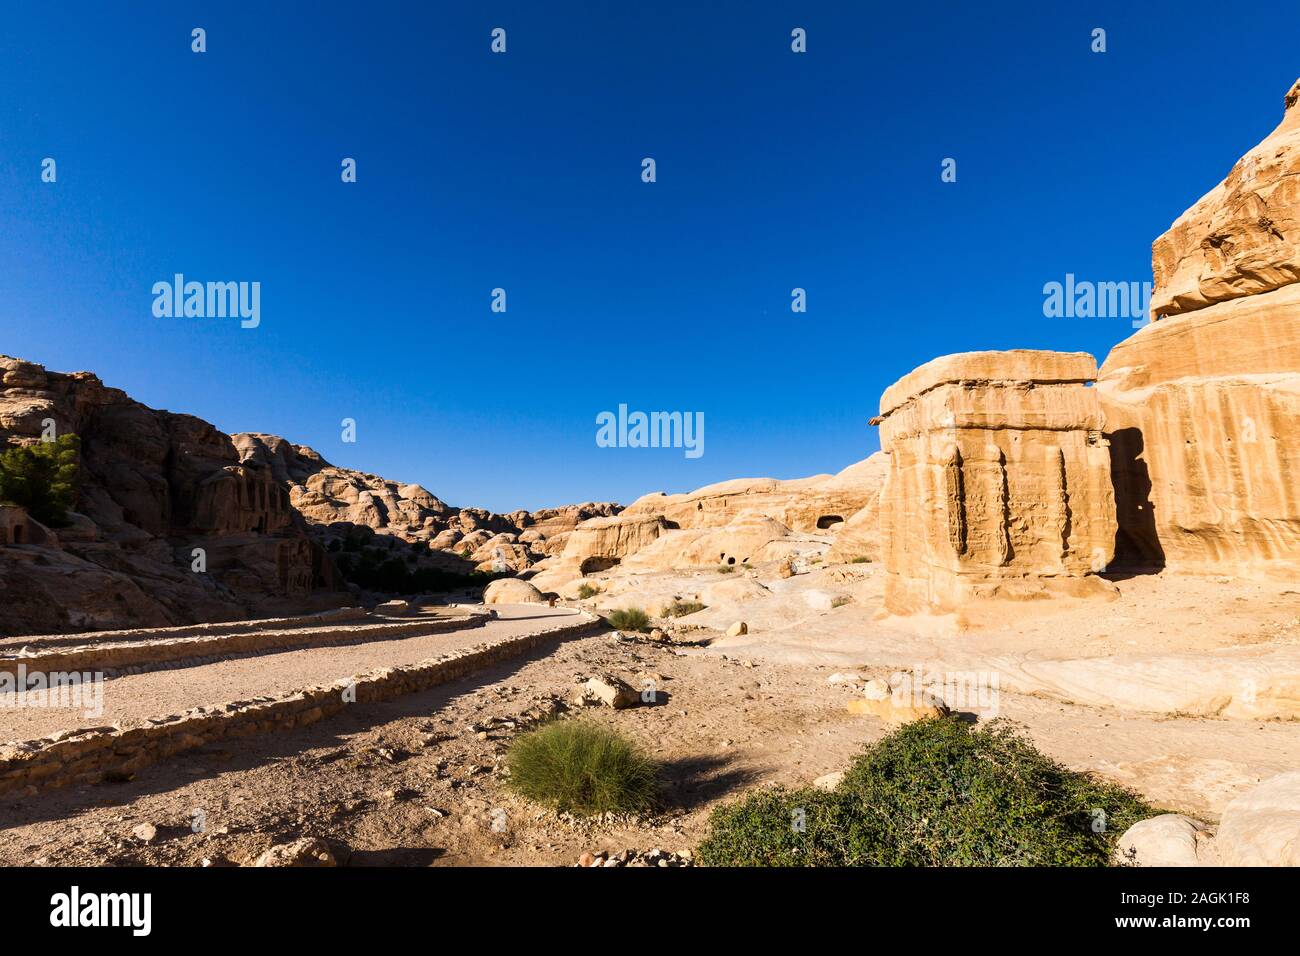 Petra, rock carving monument, near entrance of Petra, Jordan, middle east, Asia Stock Photo